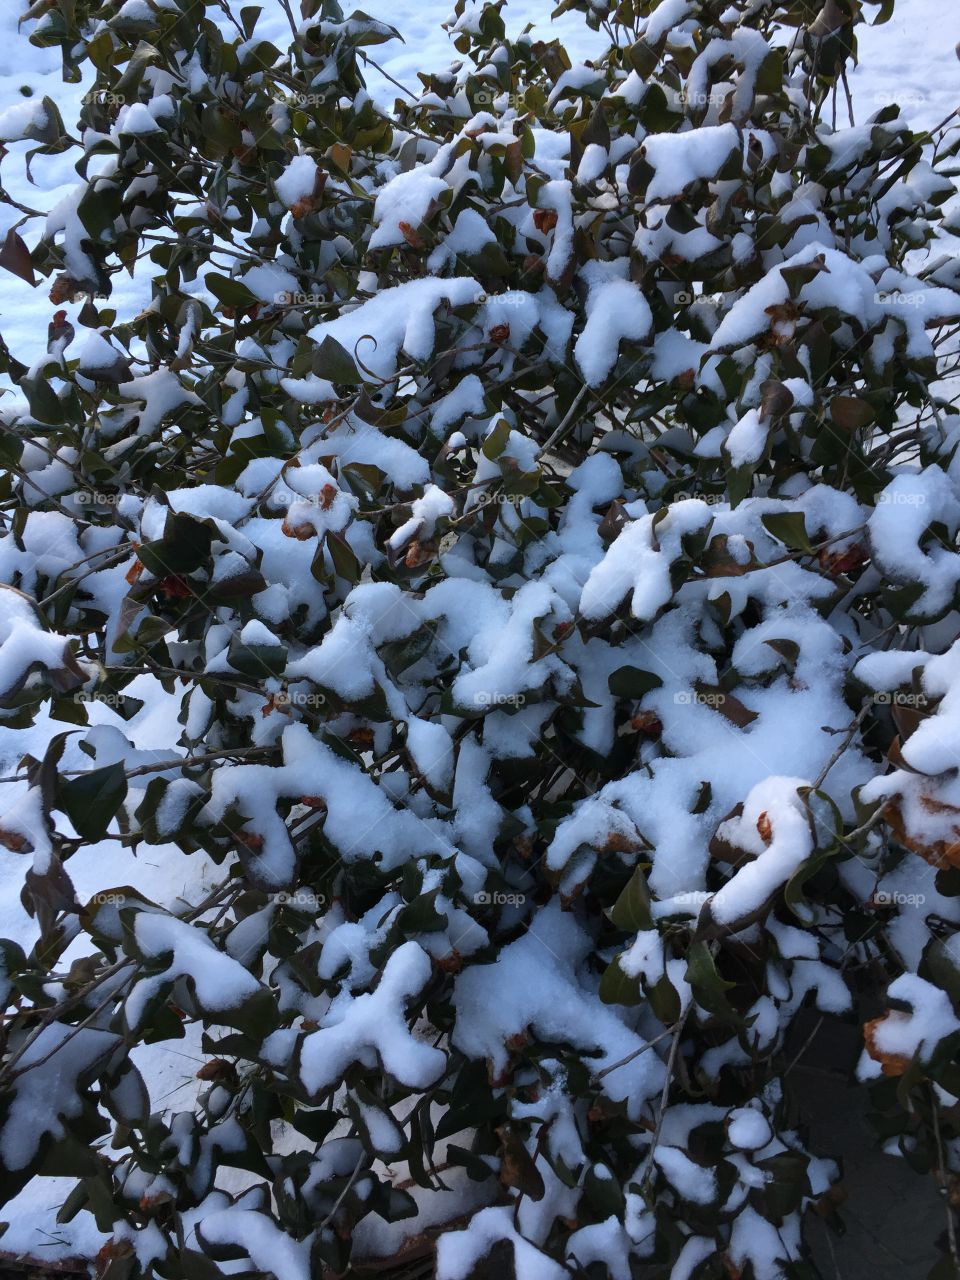 Snow on bush